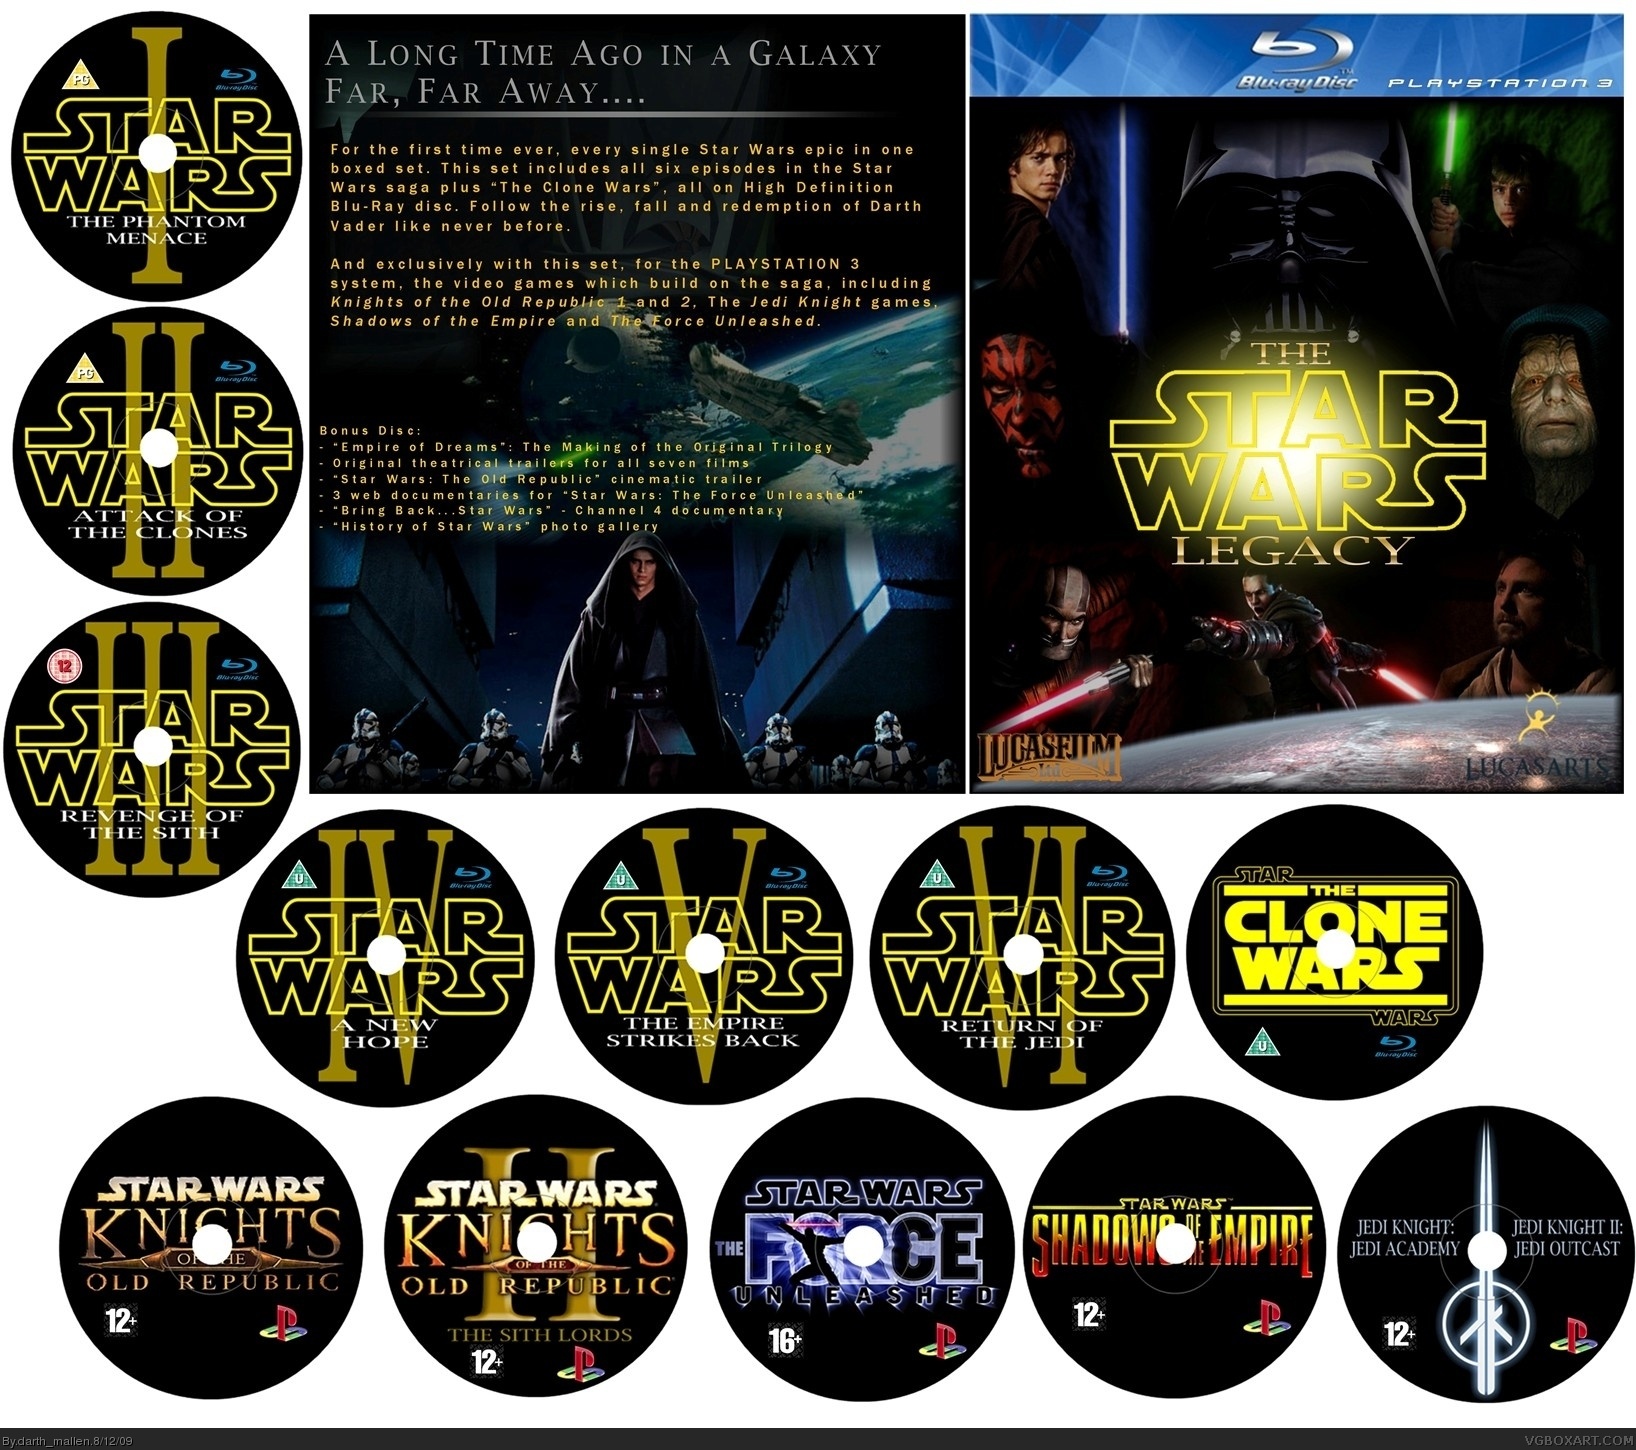 Star Wars Legacy box cover